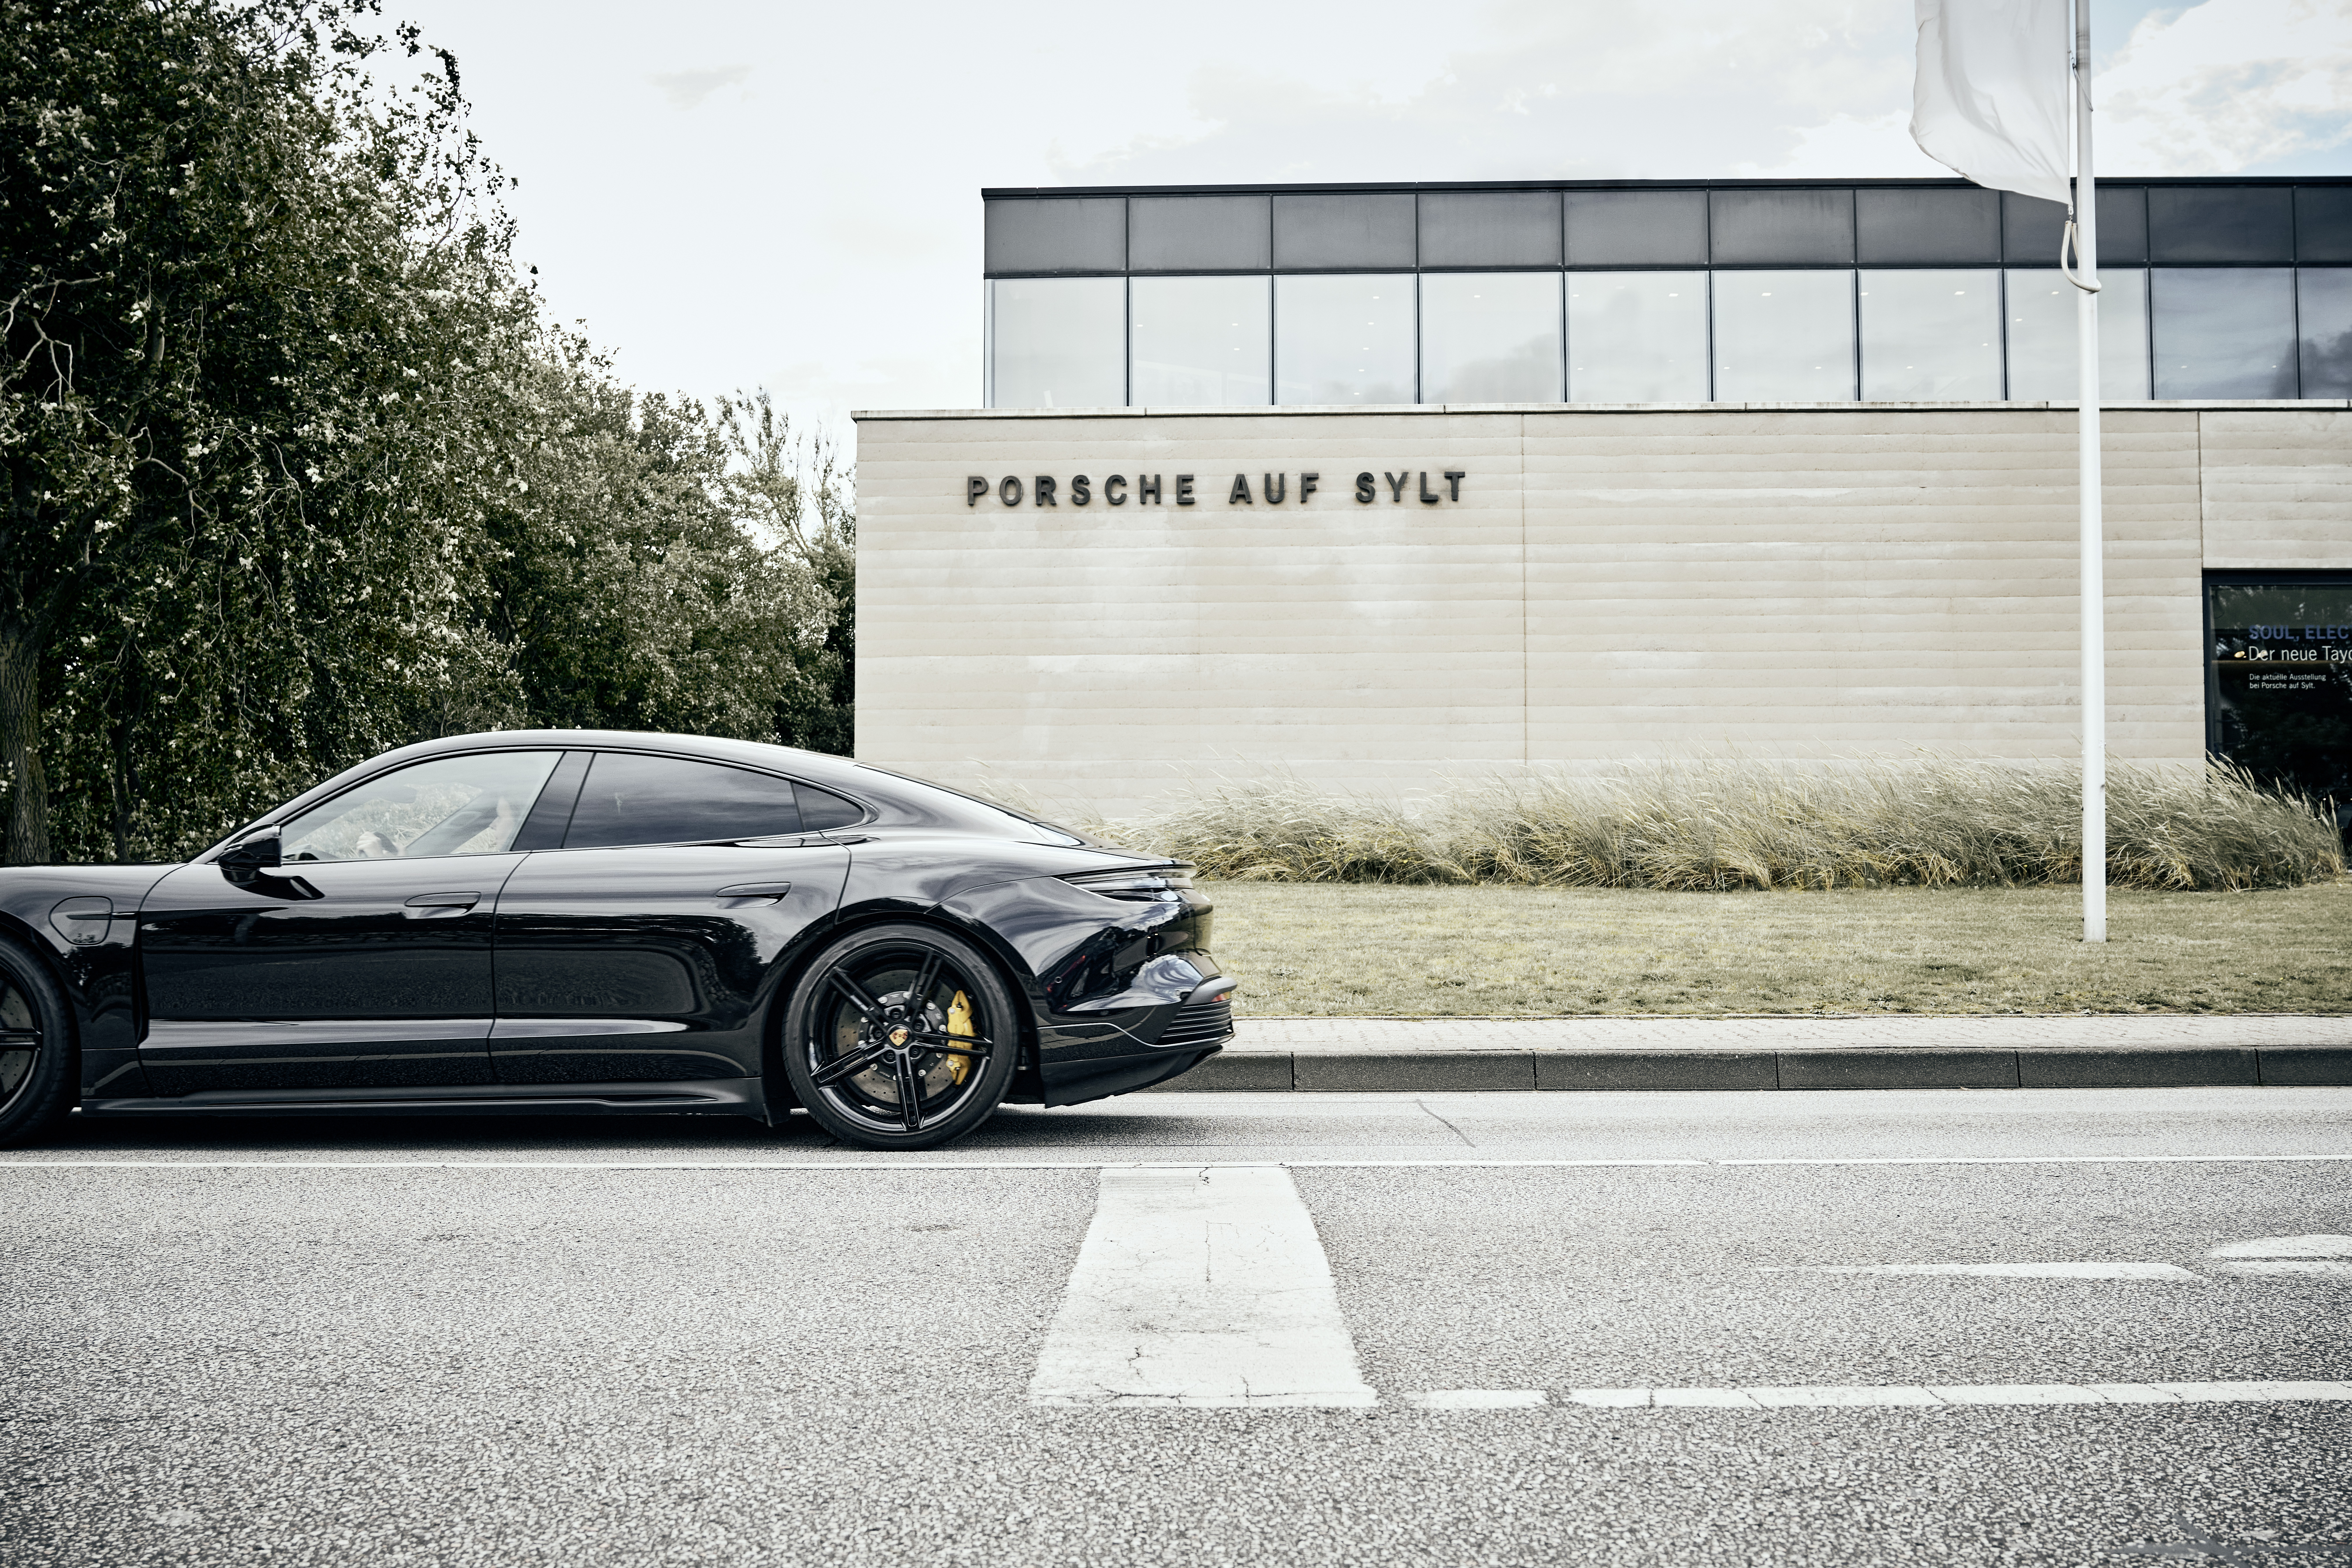 Black Taycan parked outside Porsche dealership in Sylt, Germany